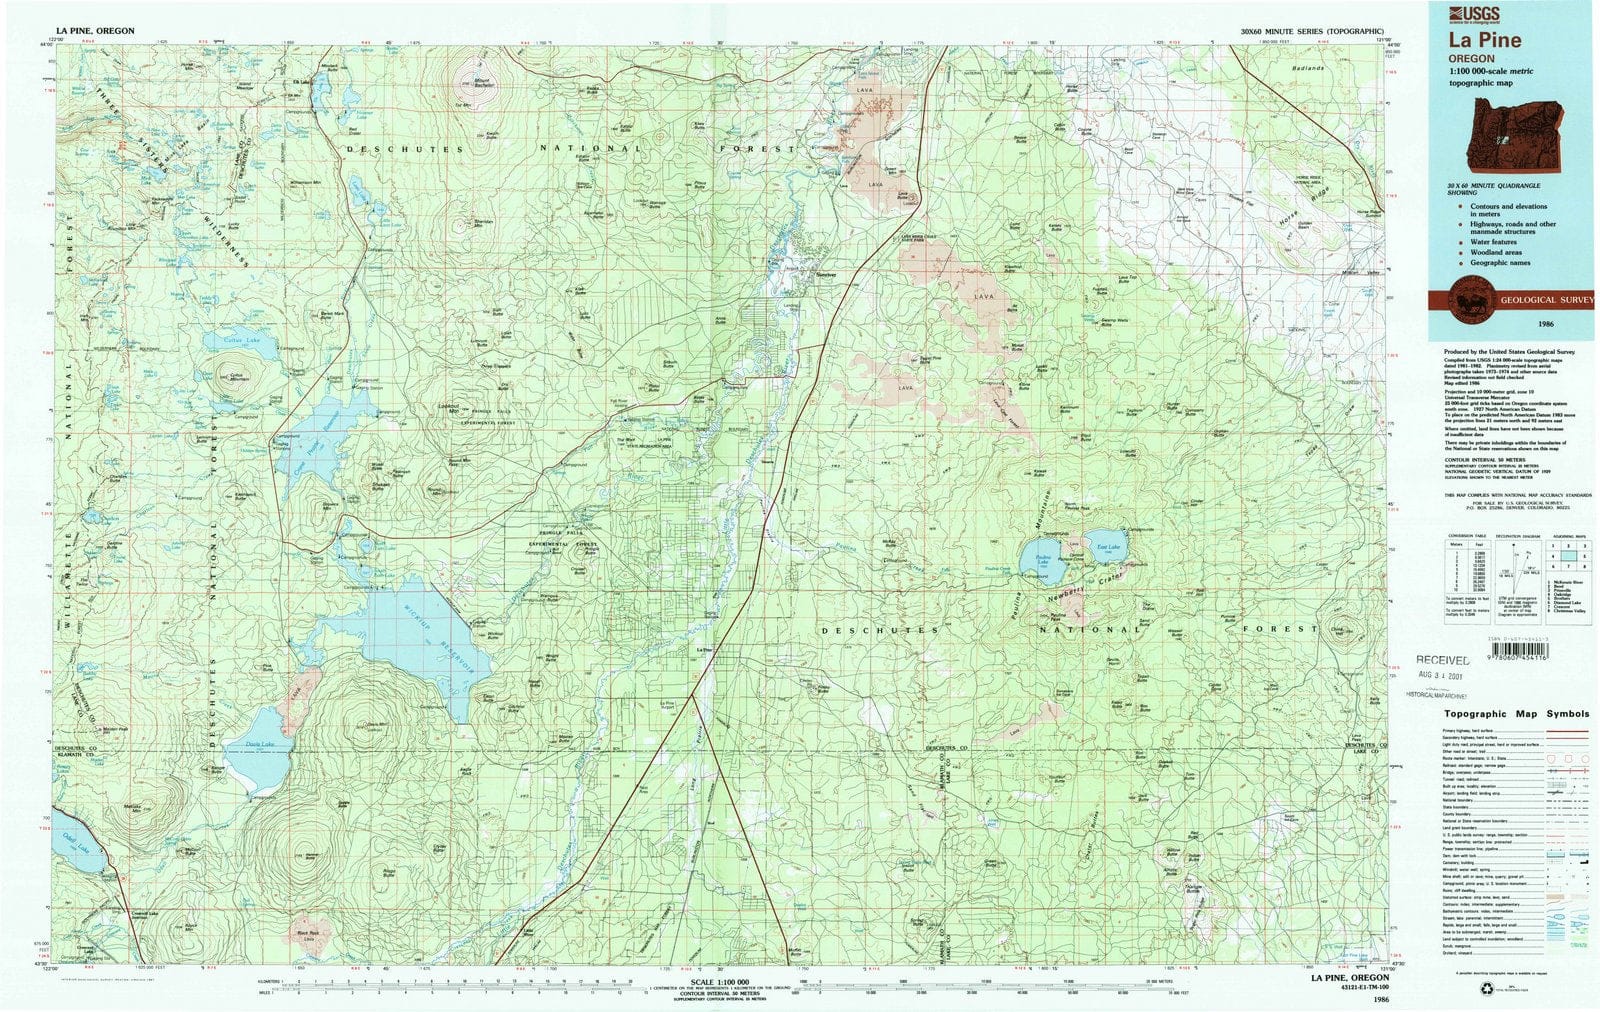 1986 La Pine, OR - Oregon - USGS Topographic Map